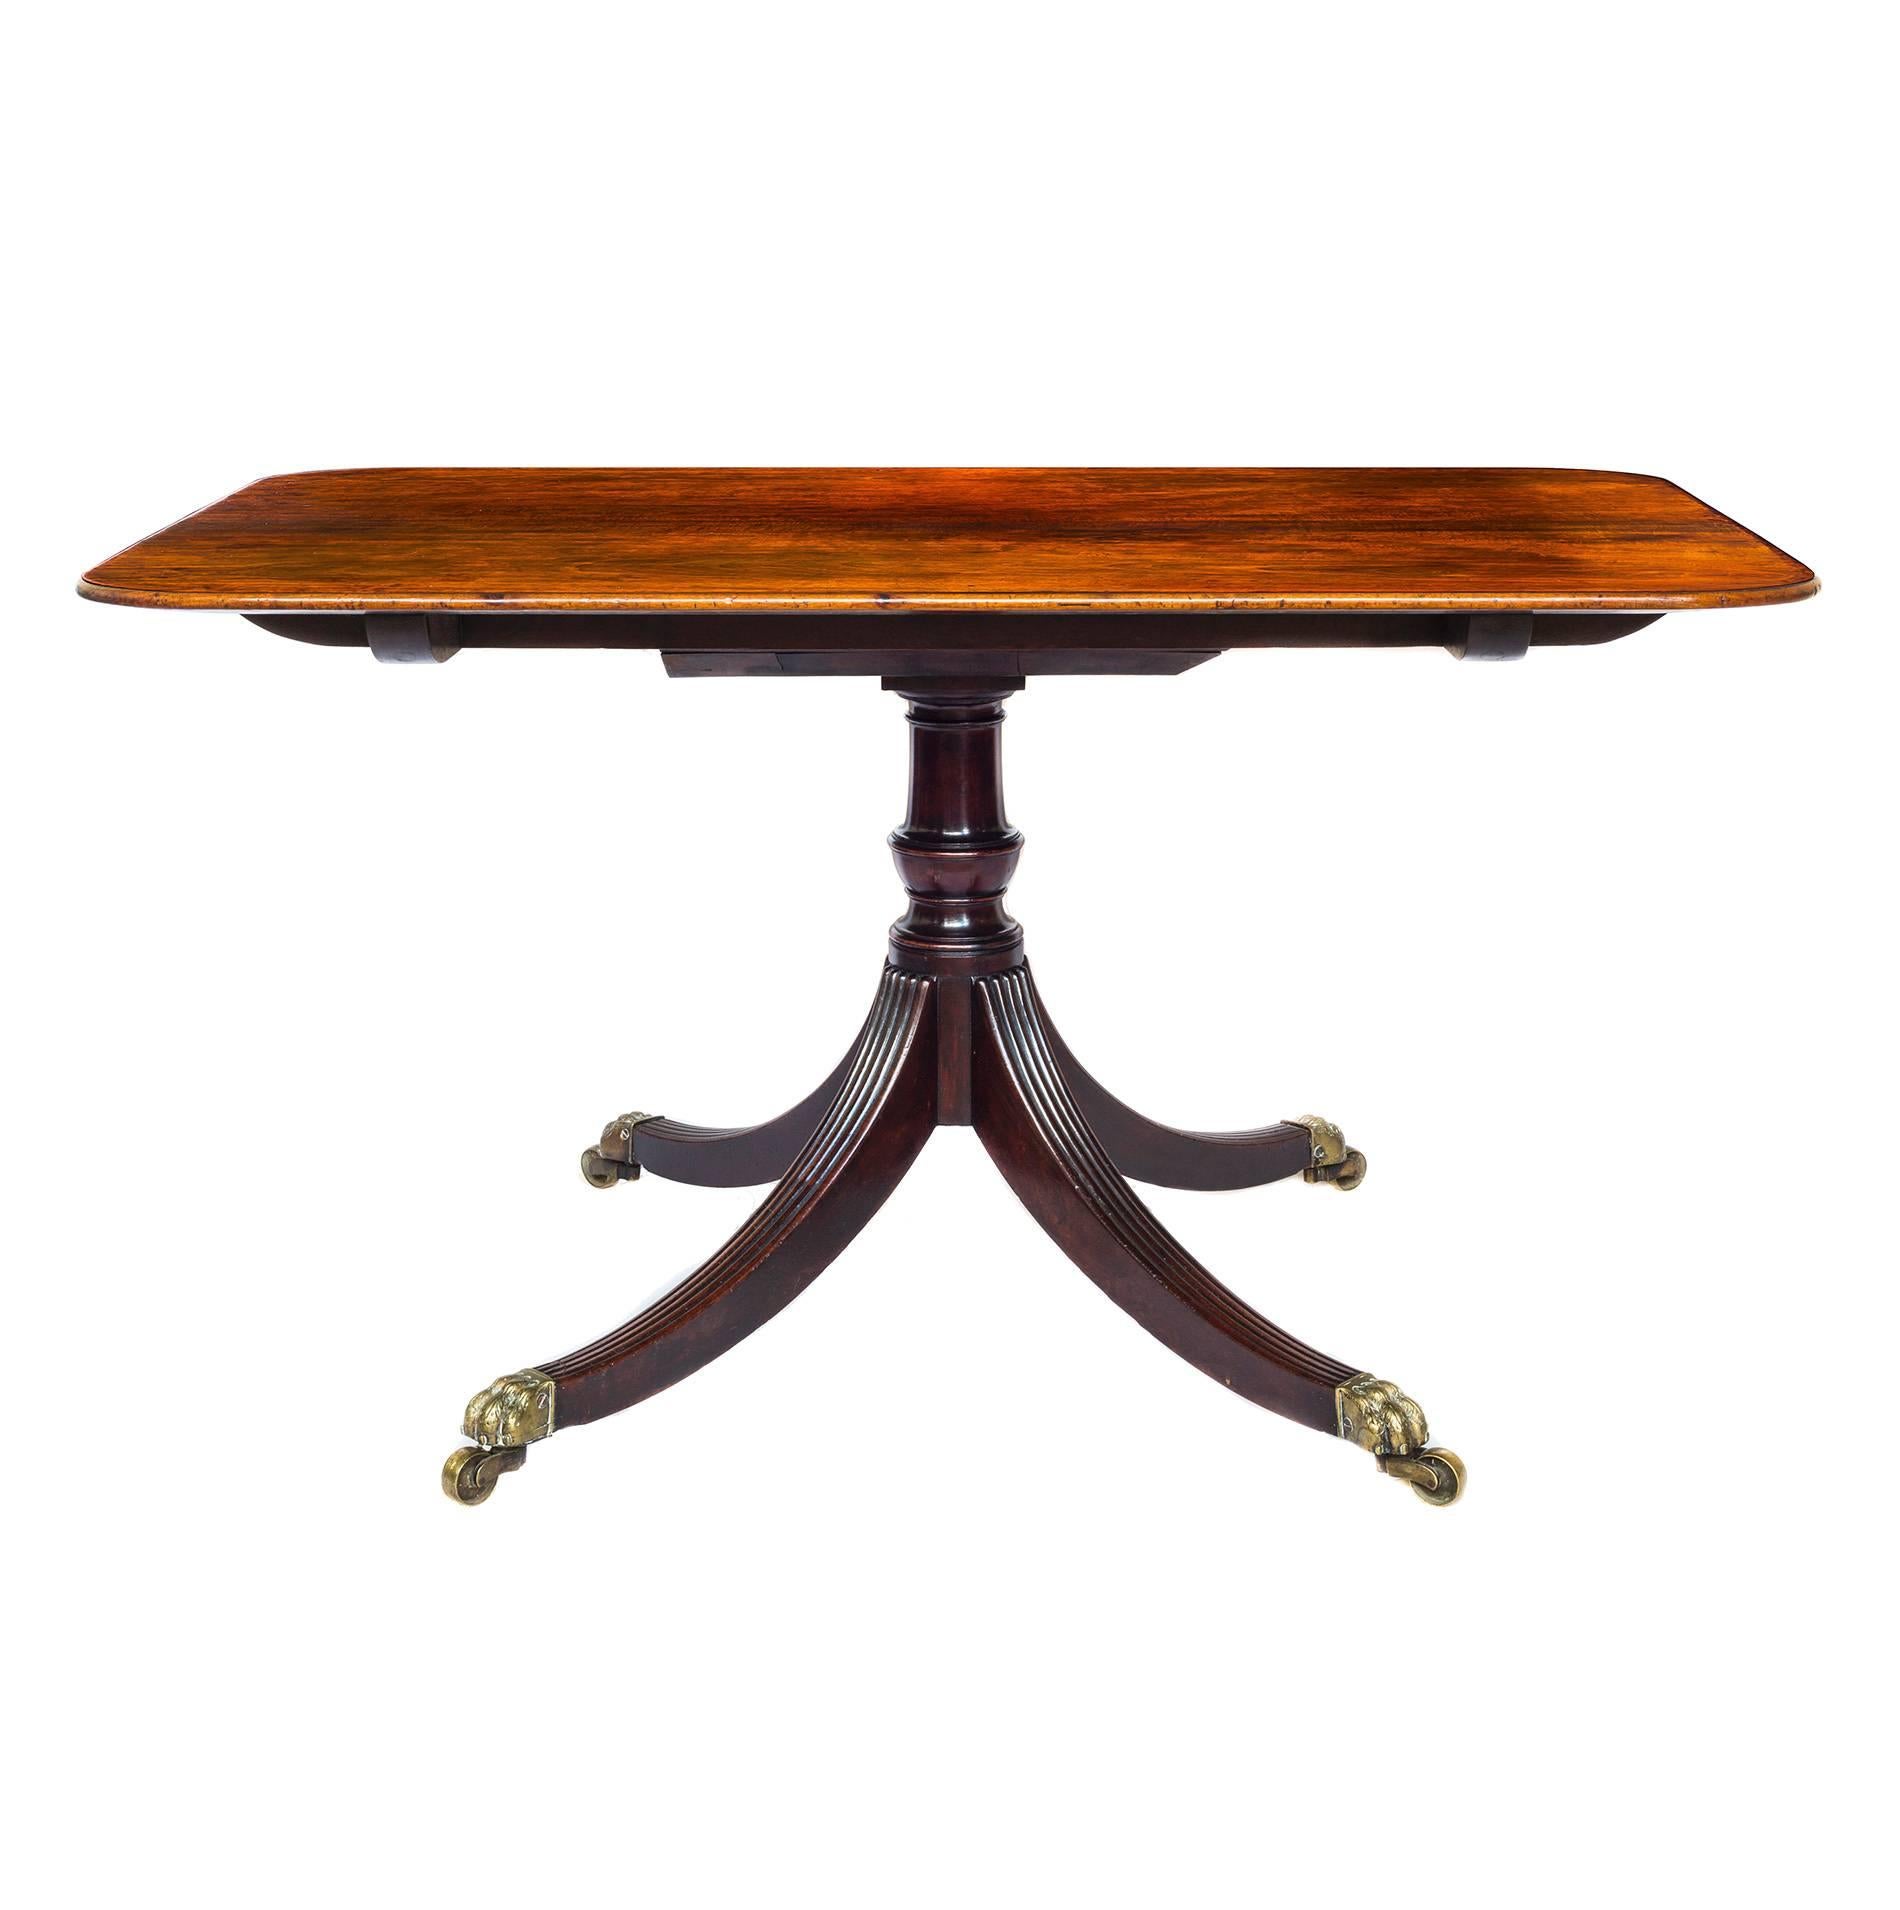 Carved Superb English George III Regency Figured Mahogany Dining Table